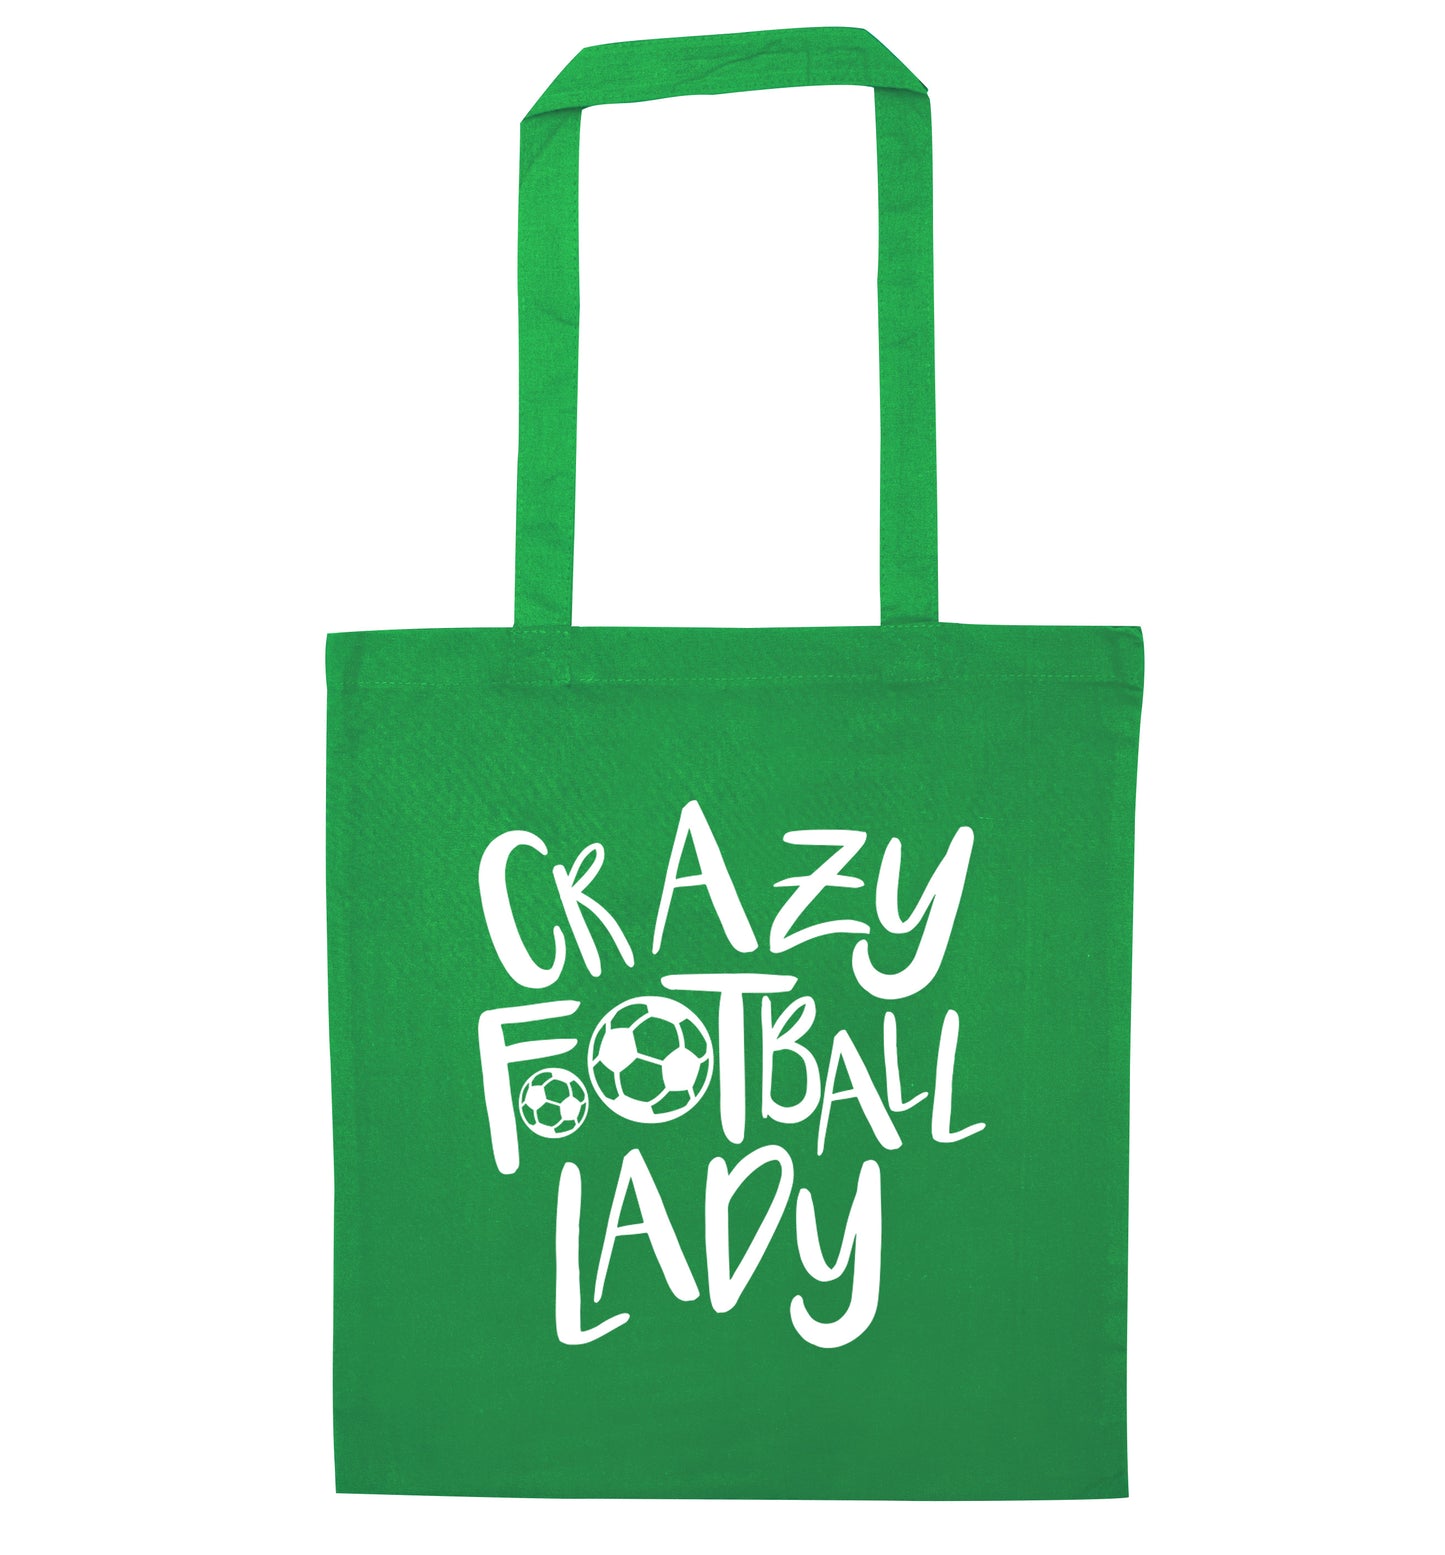 Crazy football lady green tote bag